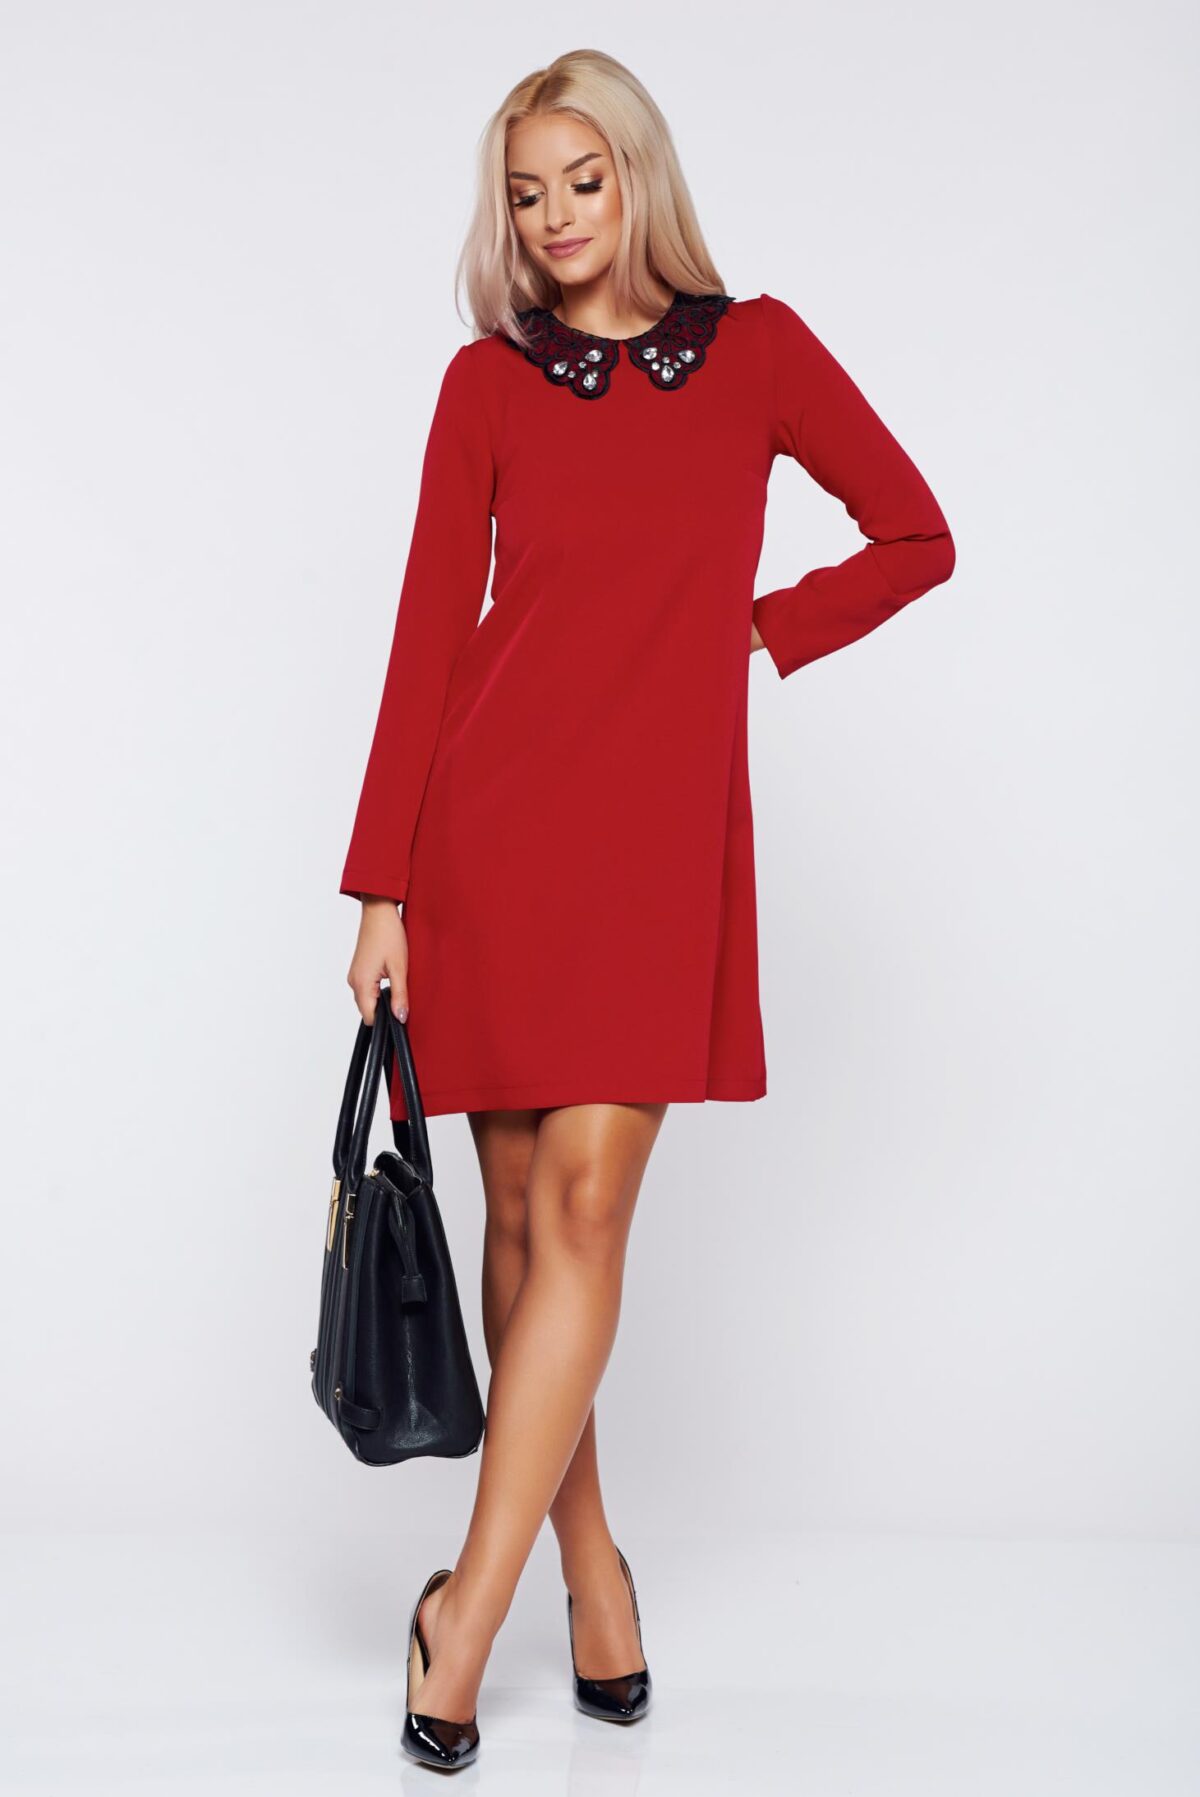 Easy Cut Red Elegant Daily Dress